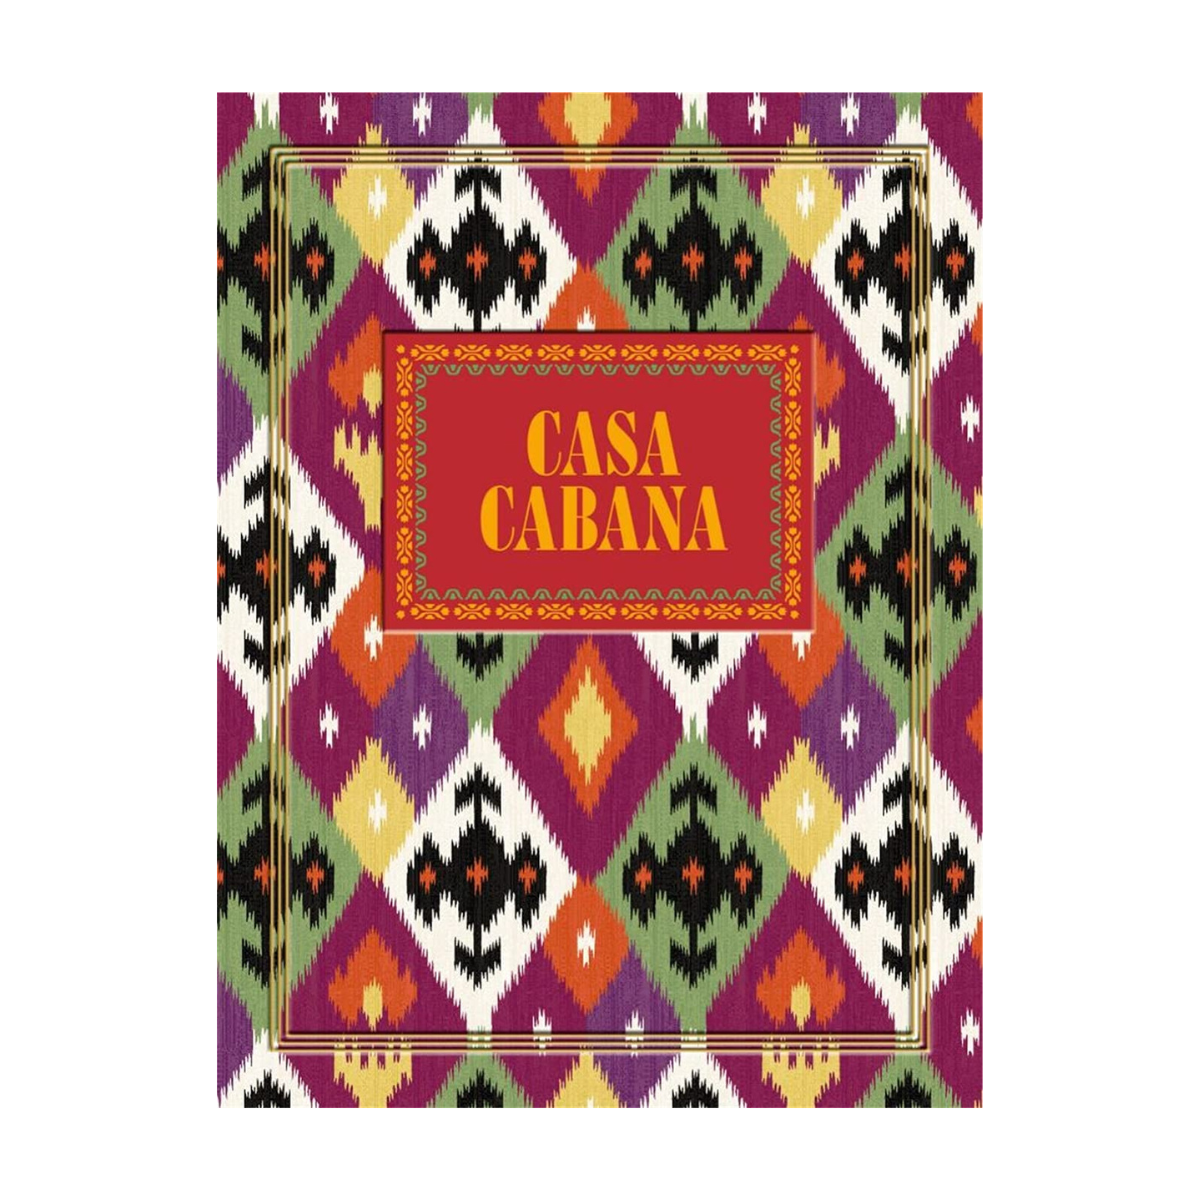 "Casa Cabana"